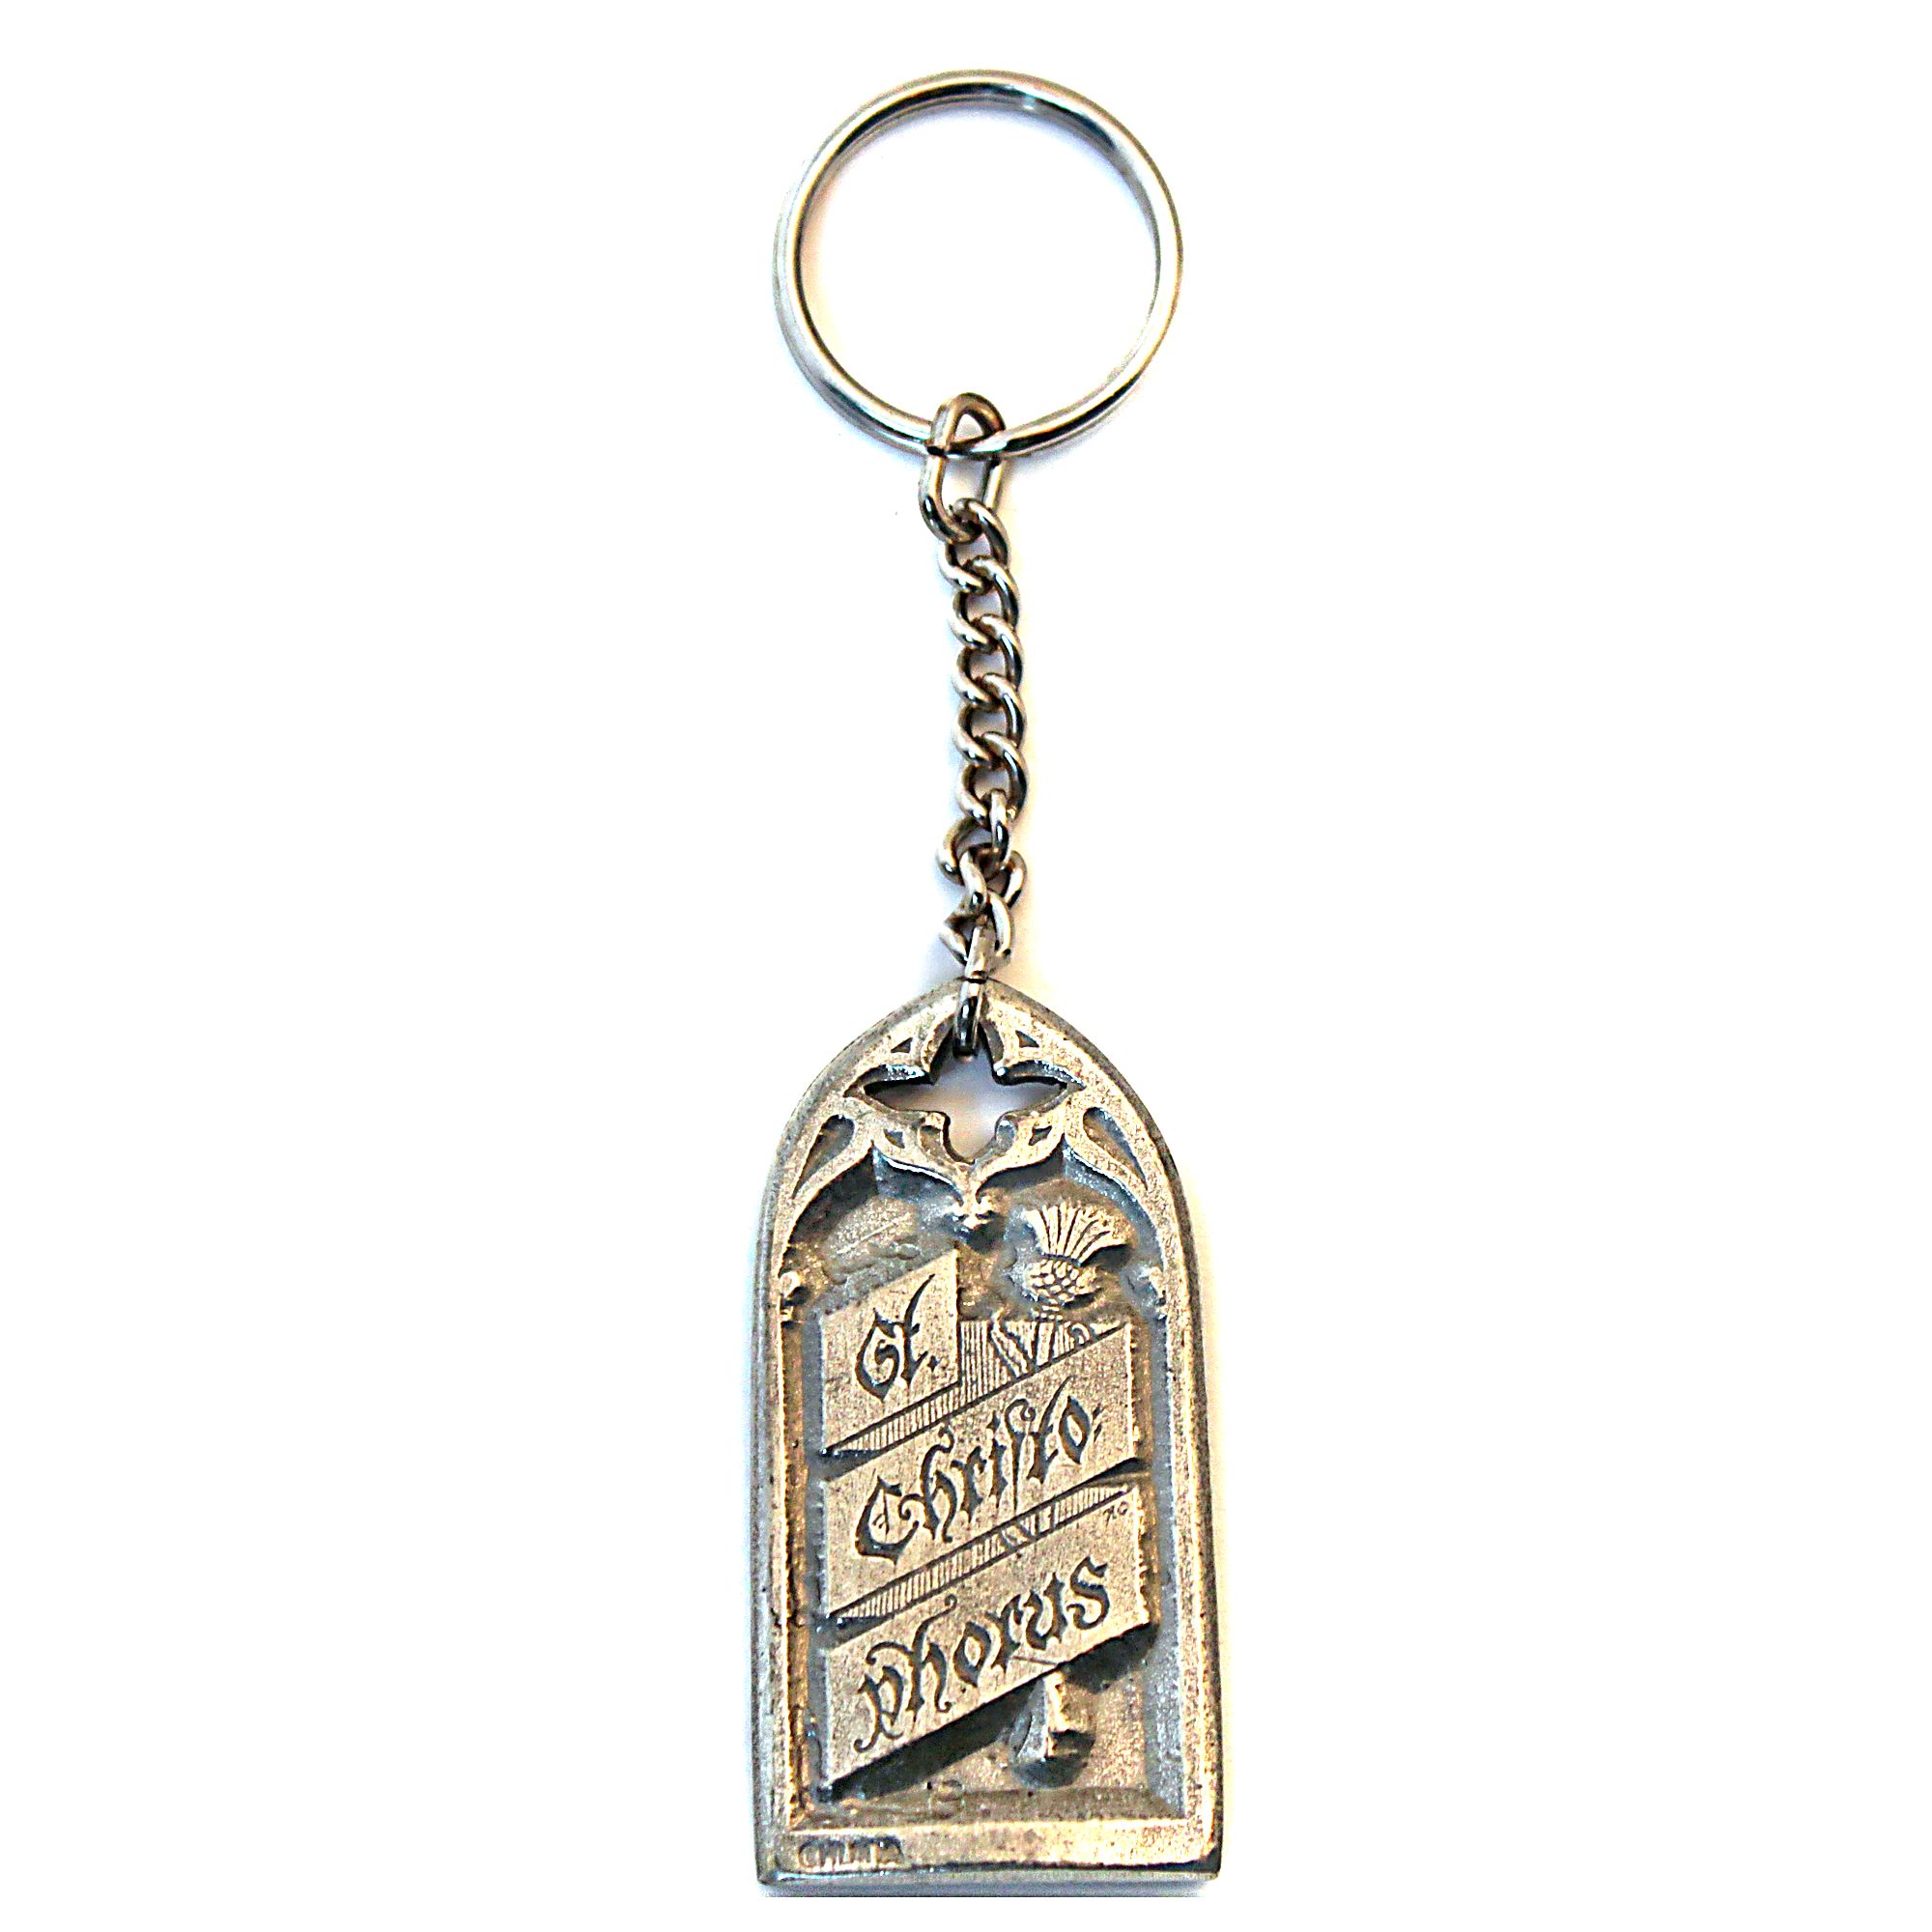 St. Christopher key ring, pewter